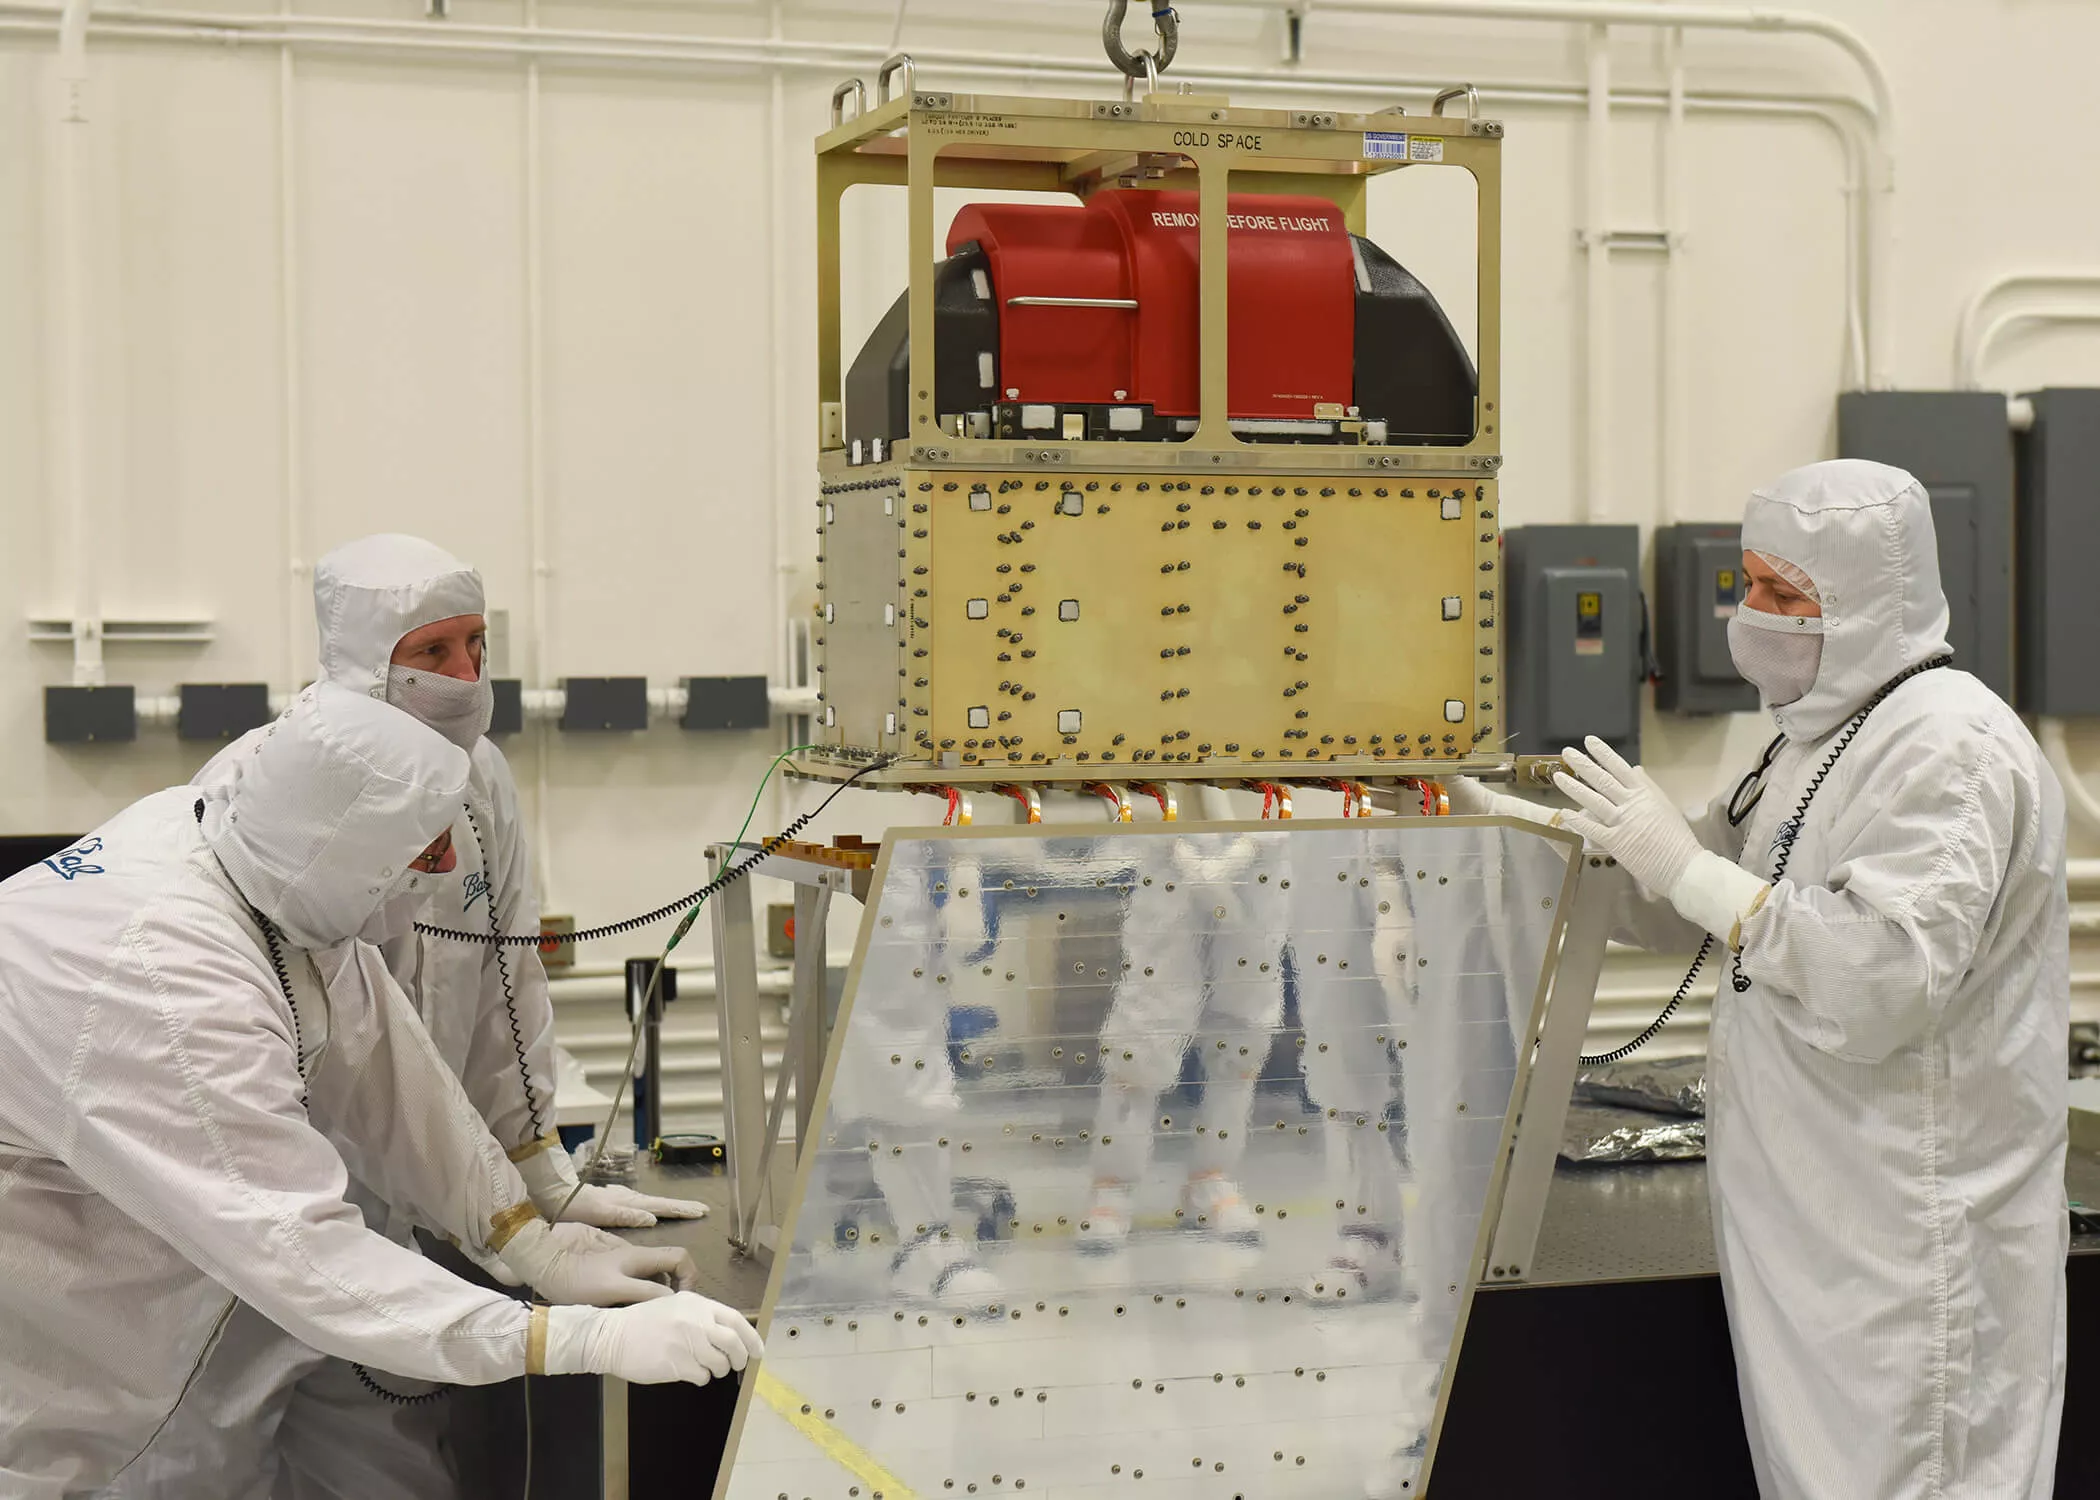 Ball Aerospace technicians lower the ATMS instrument onto the JPSS-1 spacecraft. Credit: Ball Aerospace & Technologies Corp